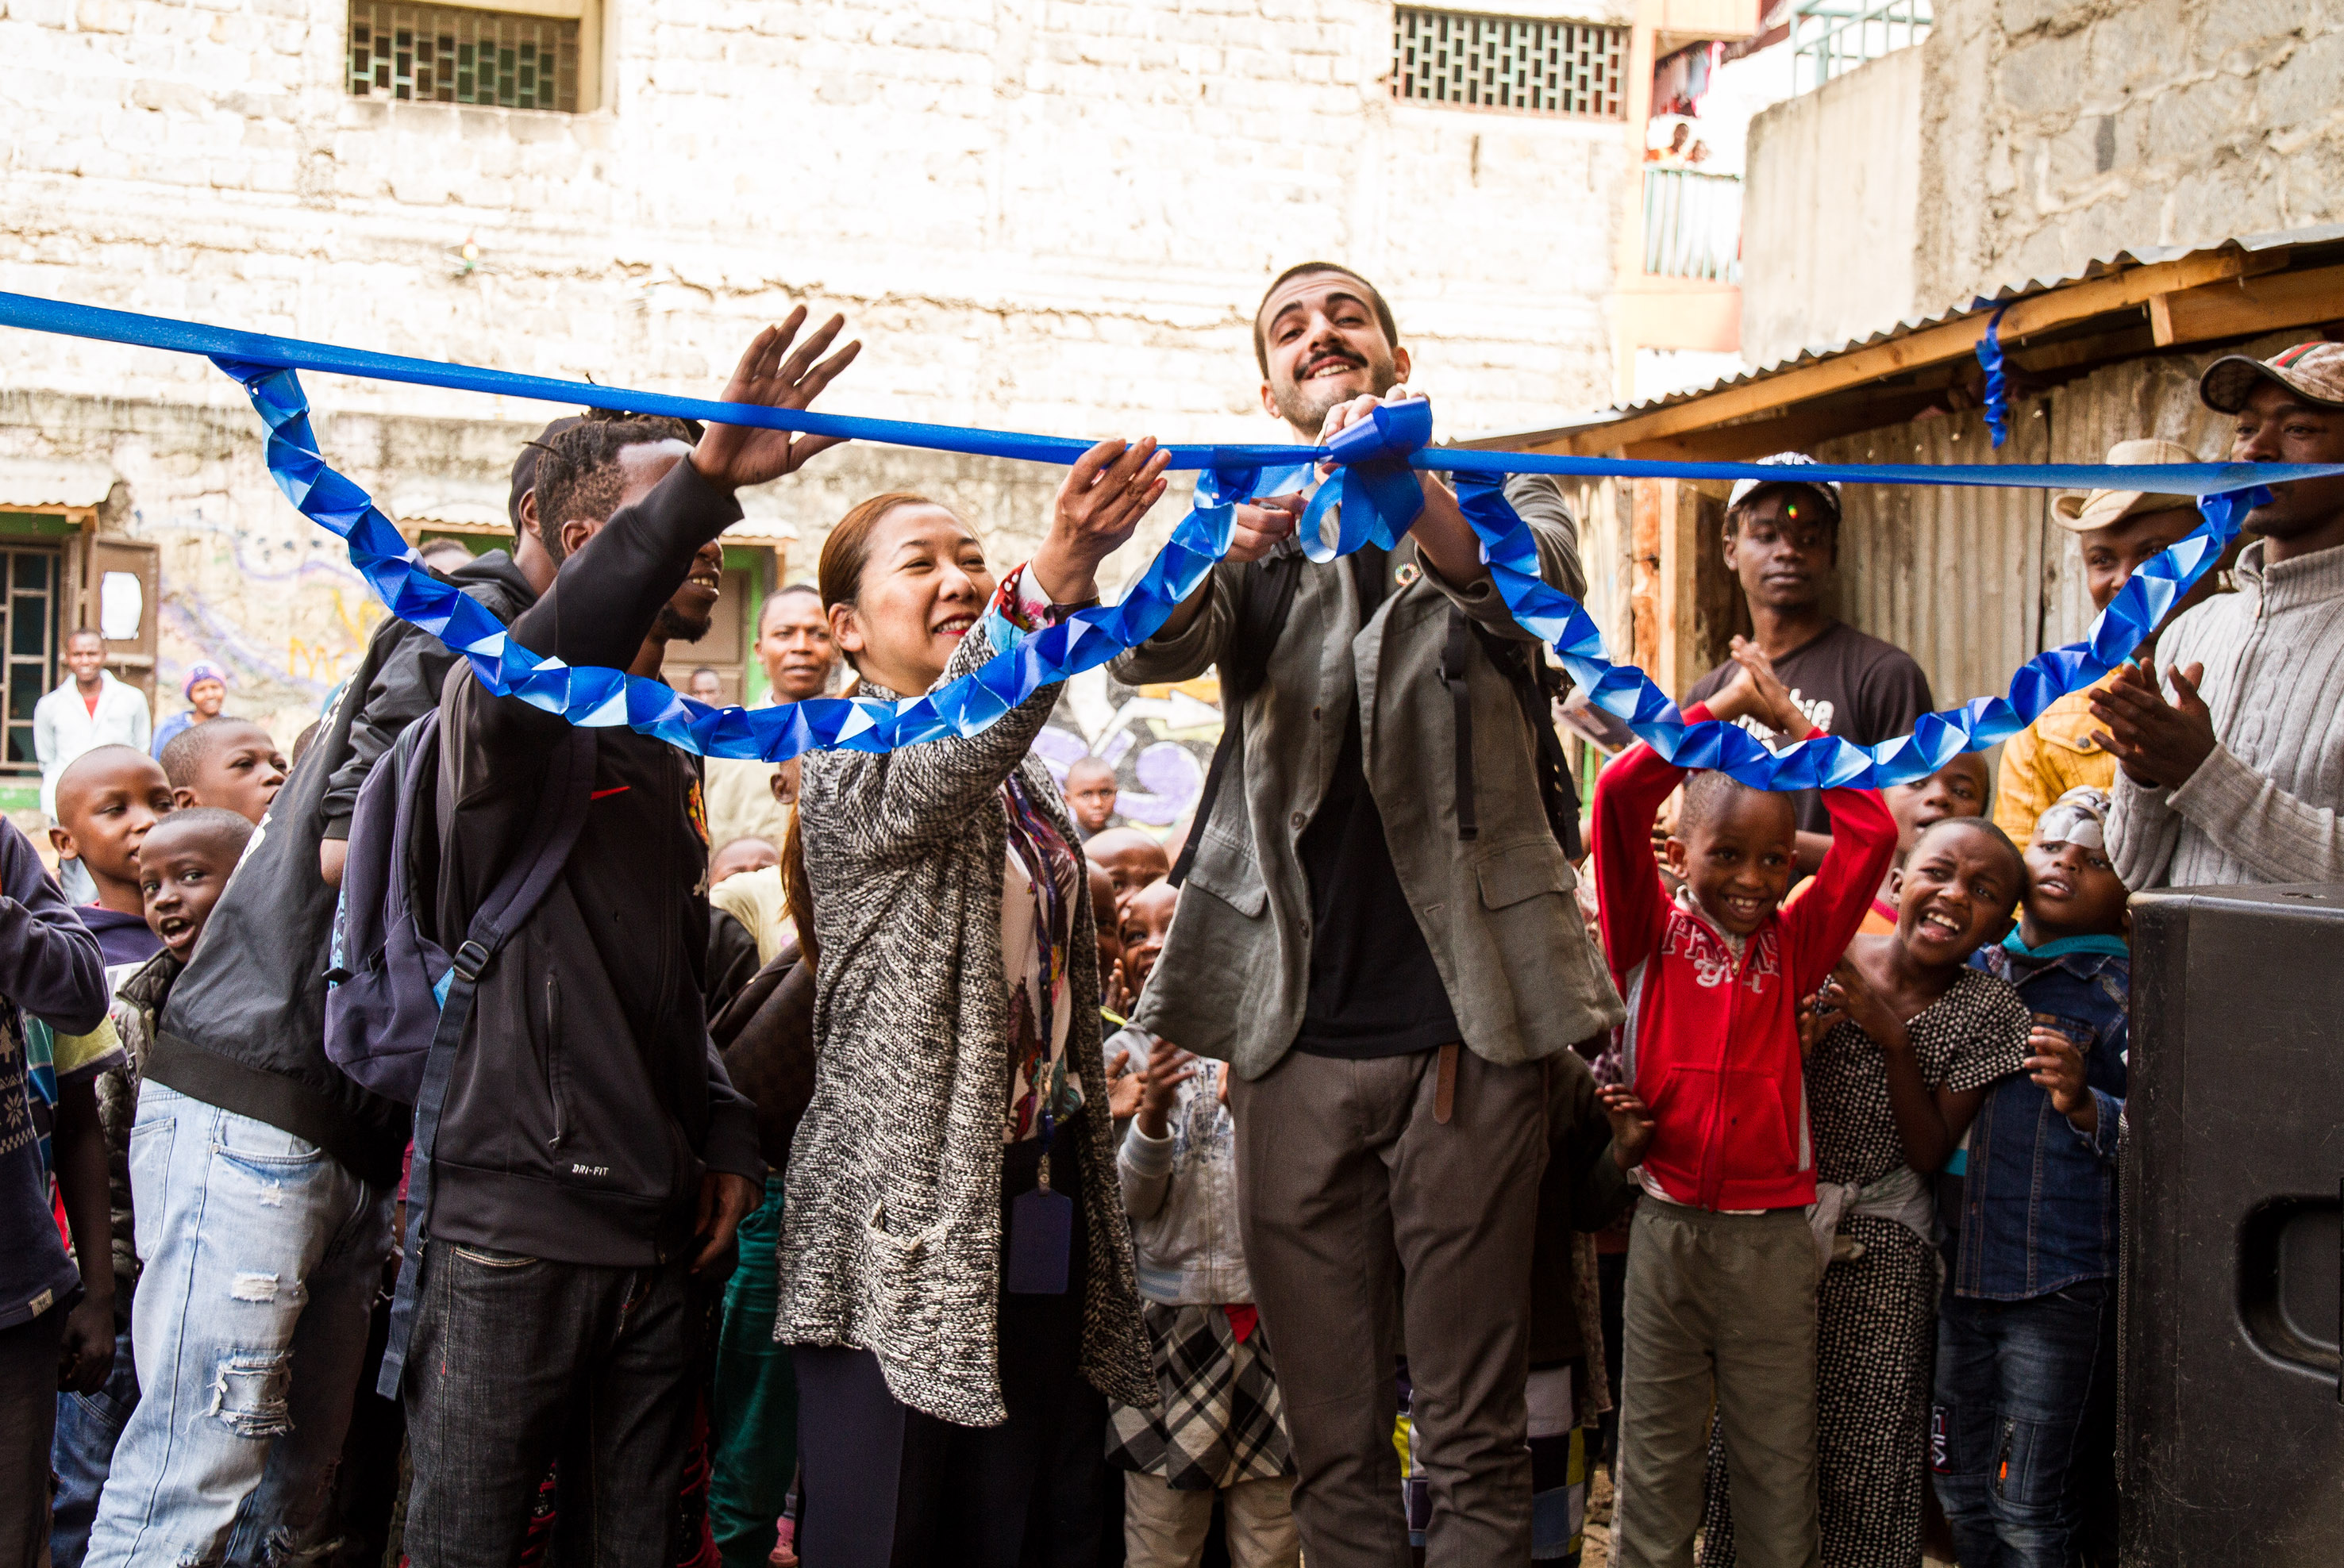 Kazumi Ogawa, UN-Habitat Chief of Staff, and Ivan Segato, Architect from ARVET, cut the ribbon to open The Children's Corner